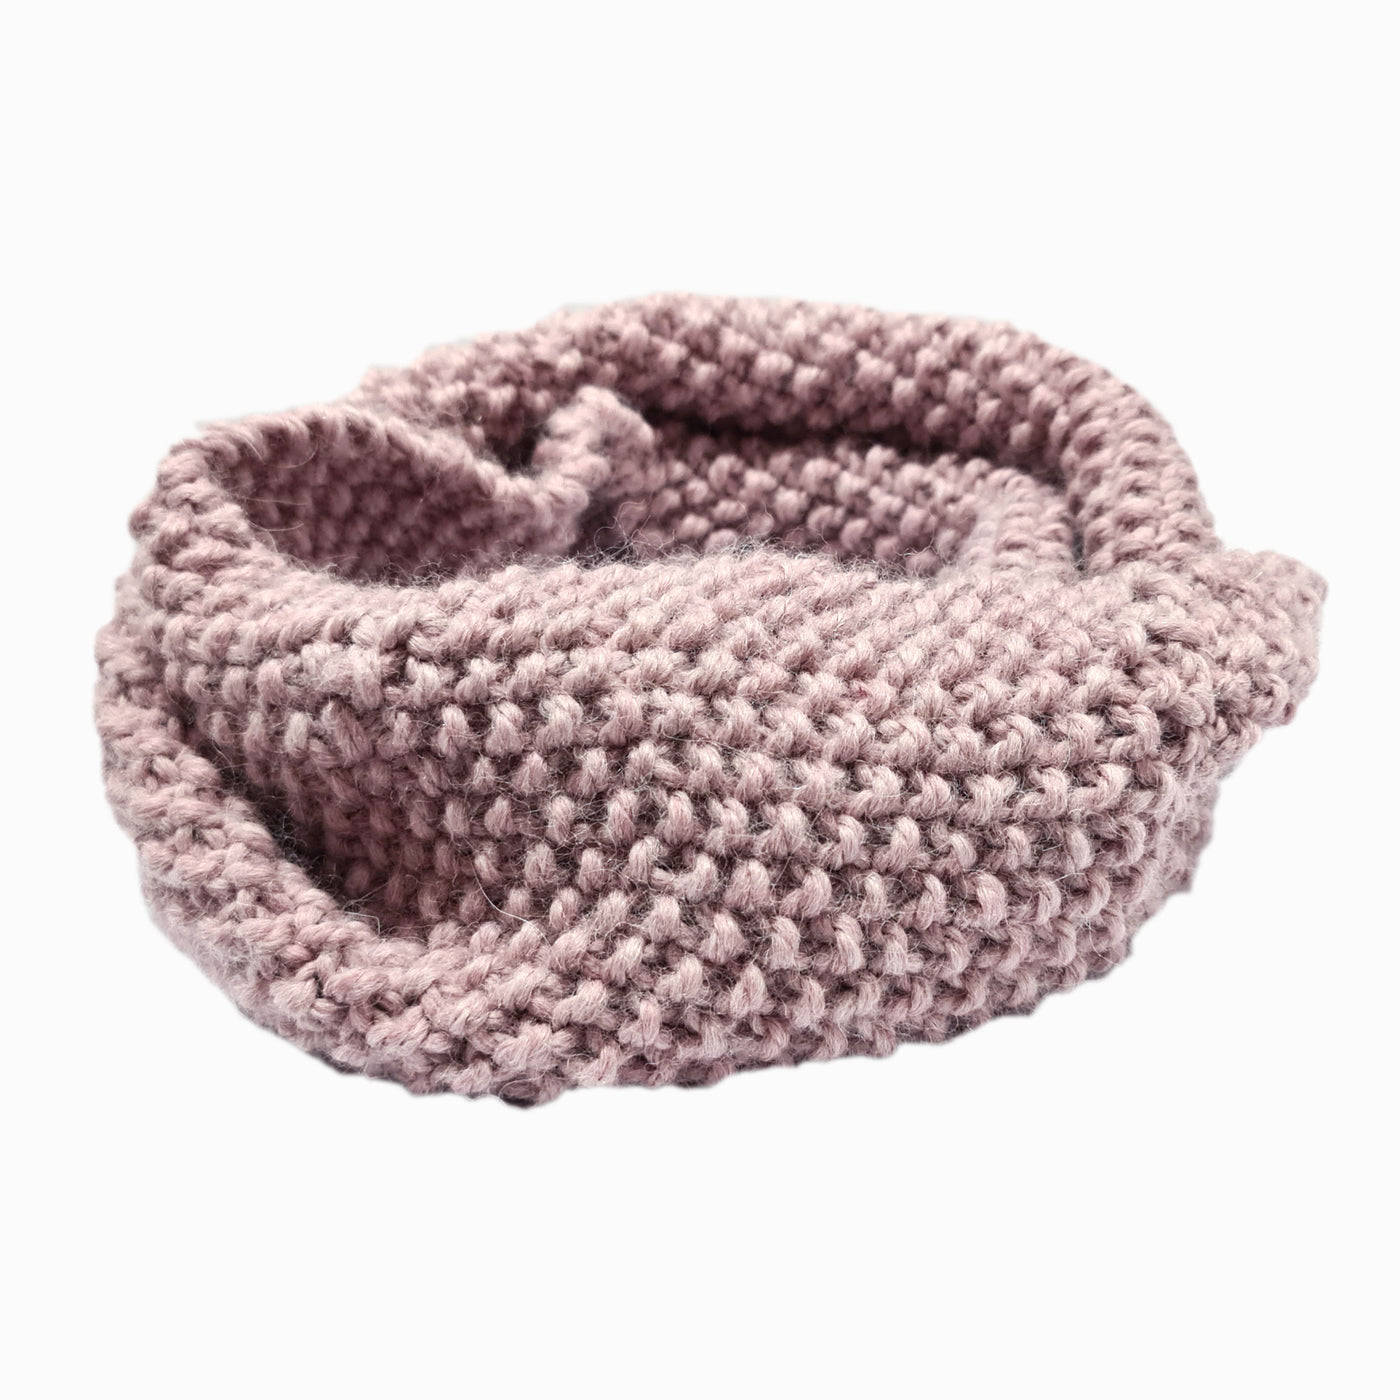 100% Alpaca Hand Knitted Infinity Scarf - Infinity Scarf Neck warmer RUFFNEK® Dusky Pink Close up